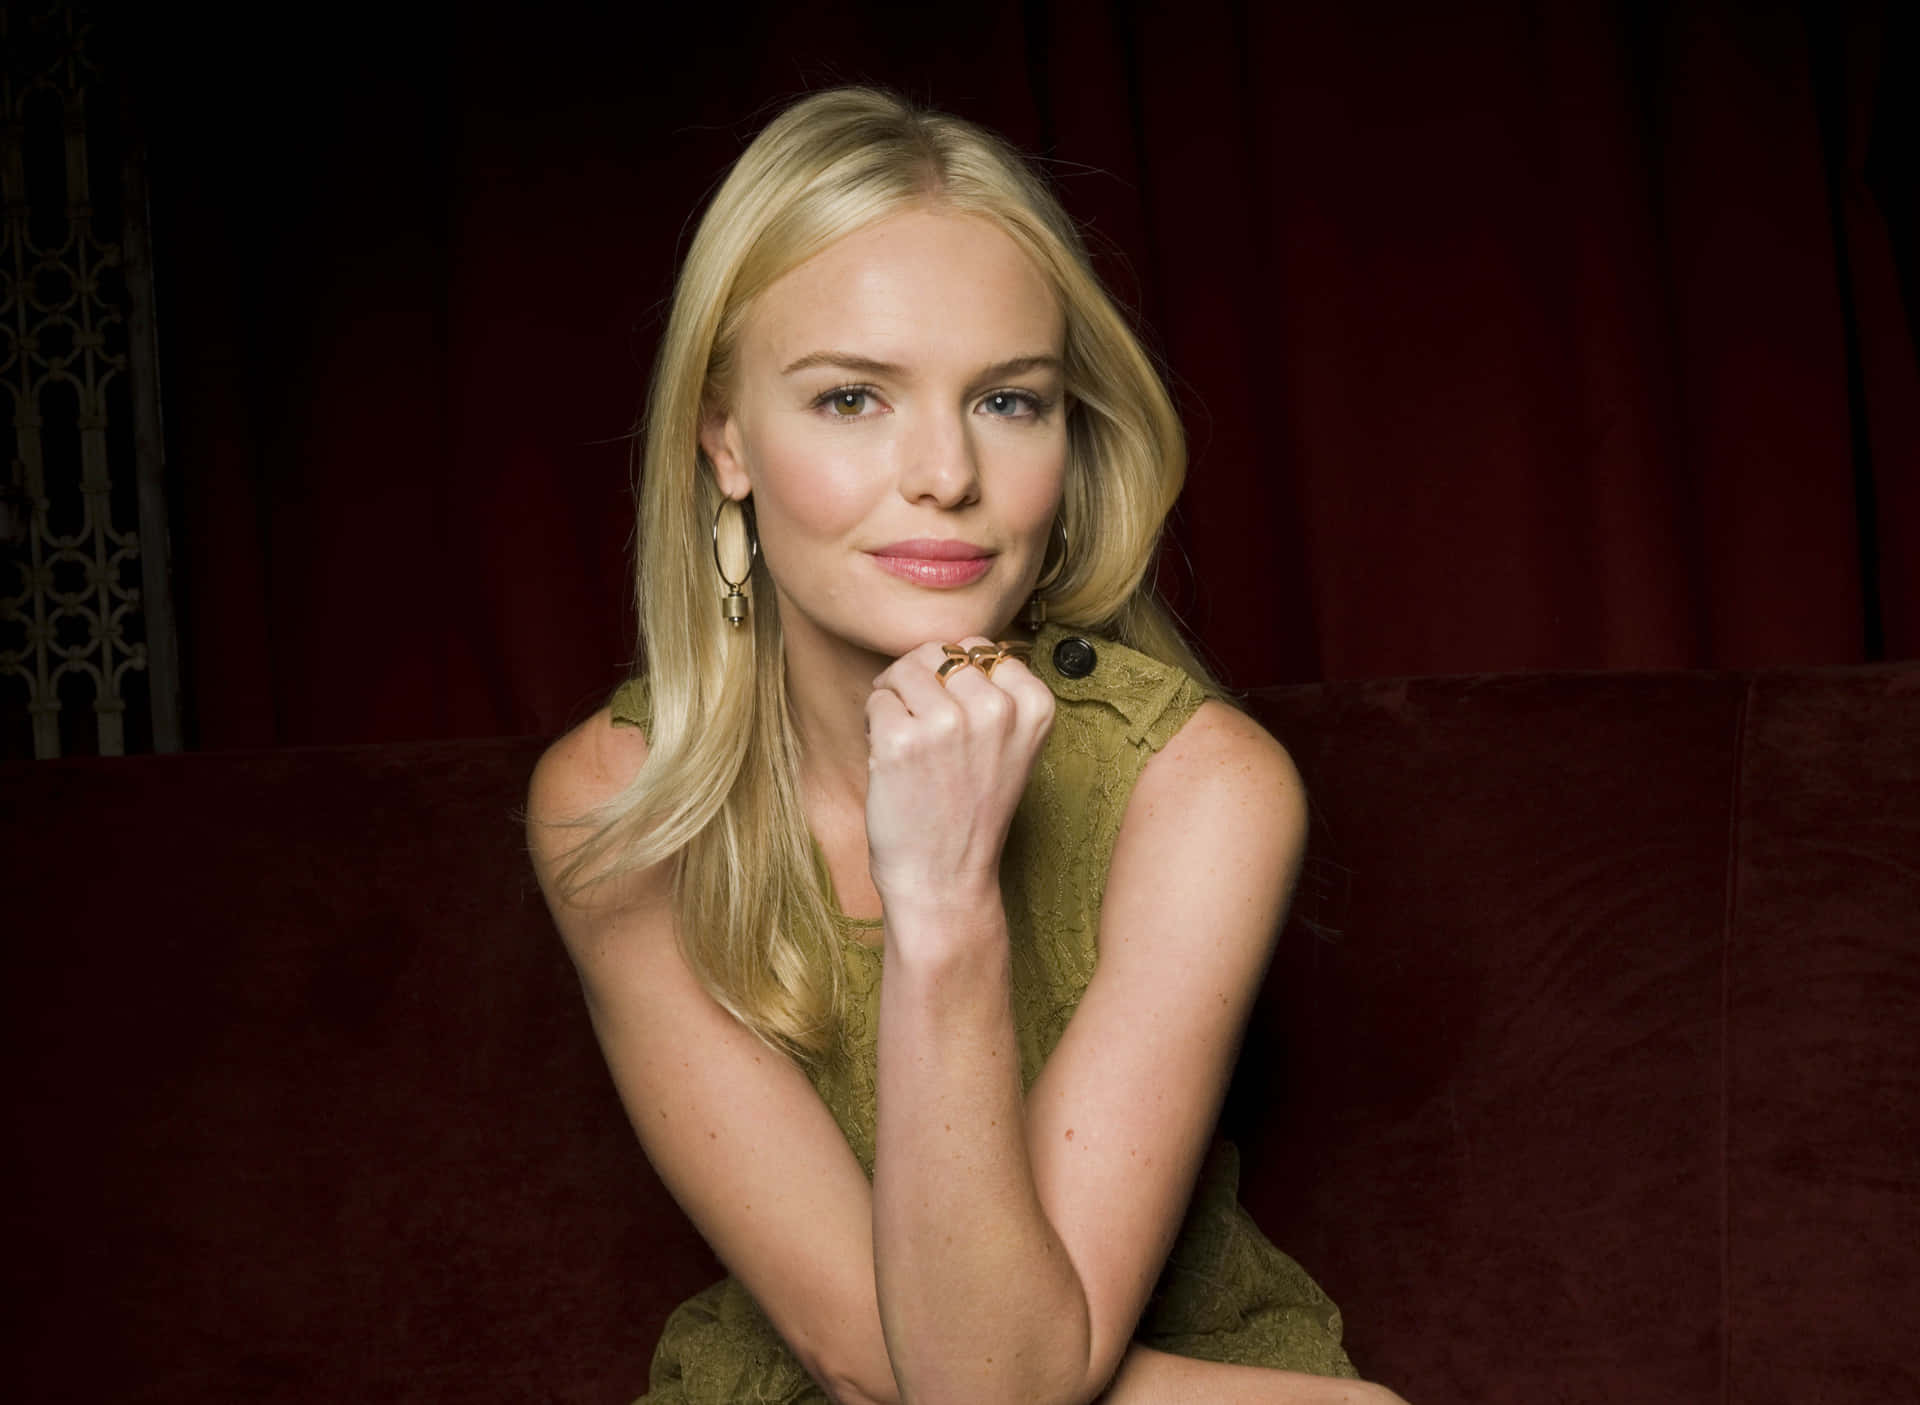 Kate Bosworth Smiling Elegantly in a Striking Photo Wallpaper